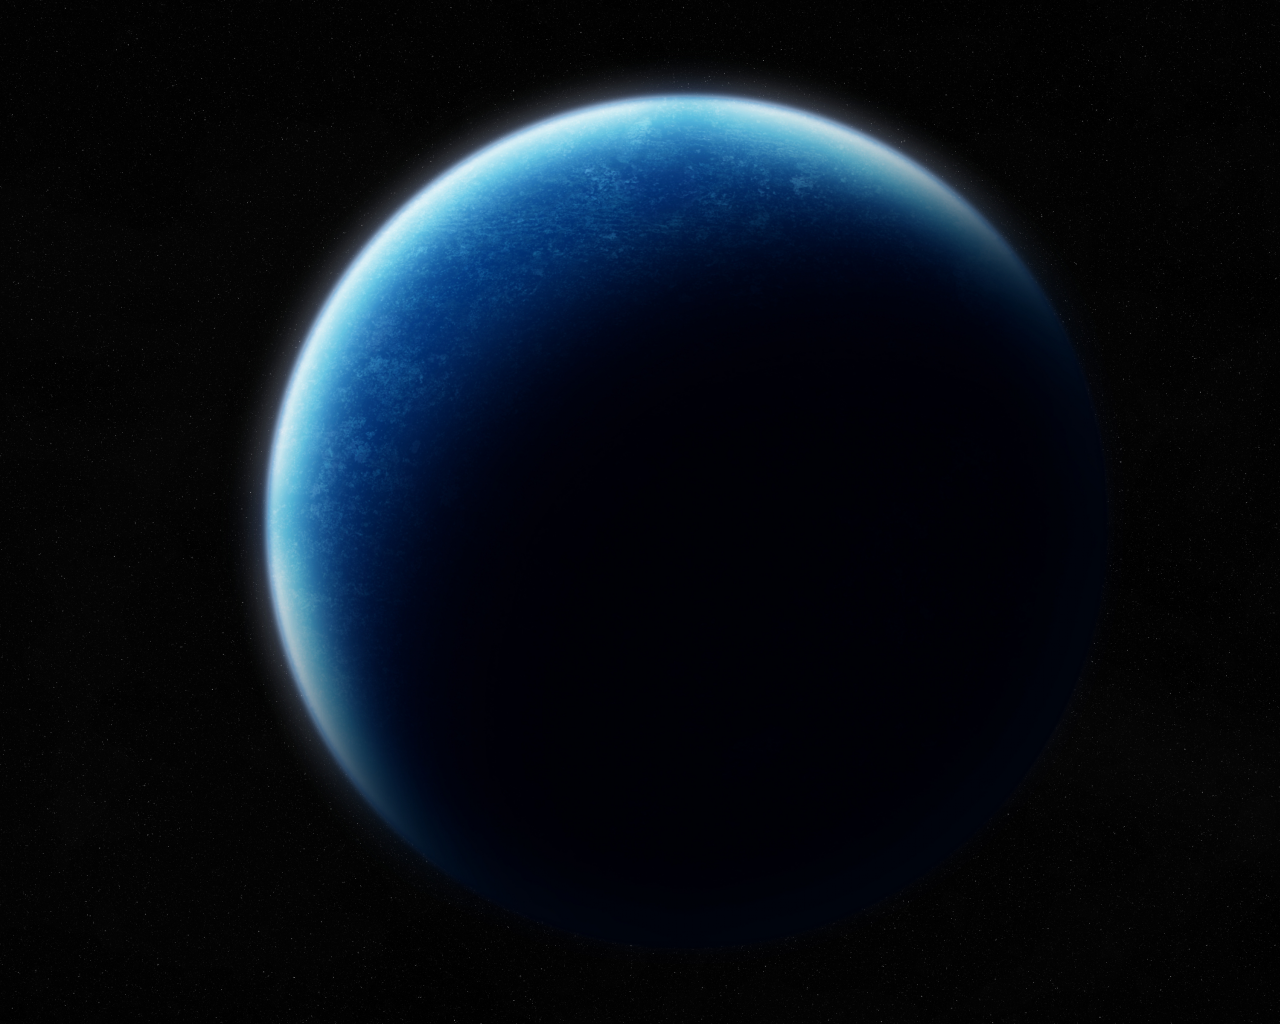 planet, sci fi, shadows, blue, black